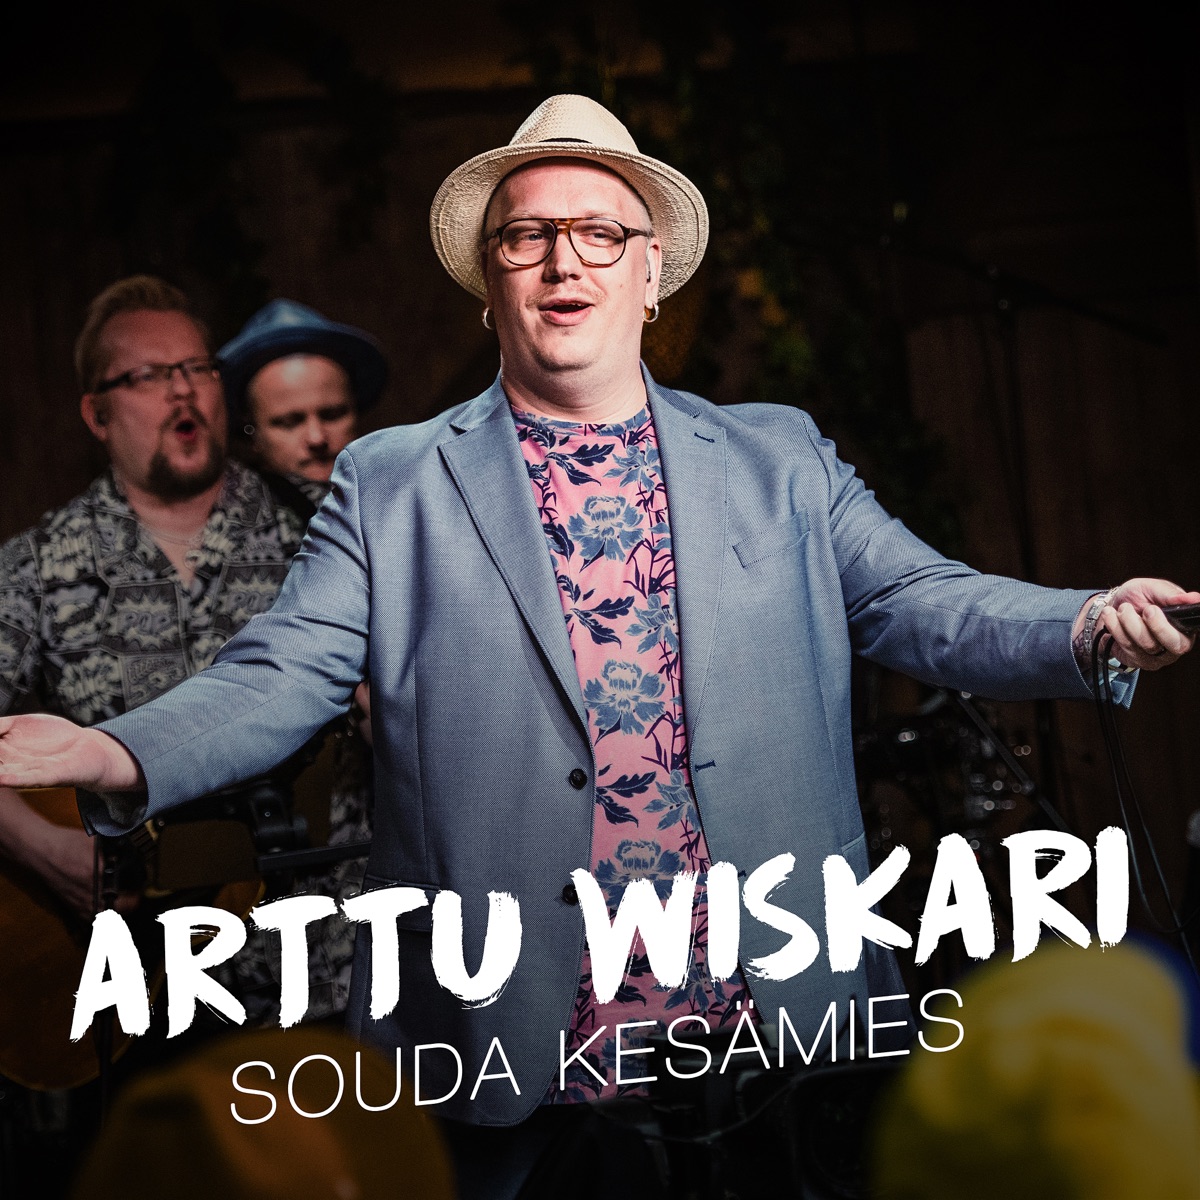 Suomen muotoisen pilven alla“ von Arttu Wiskari bei Apple Music